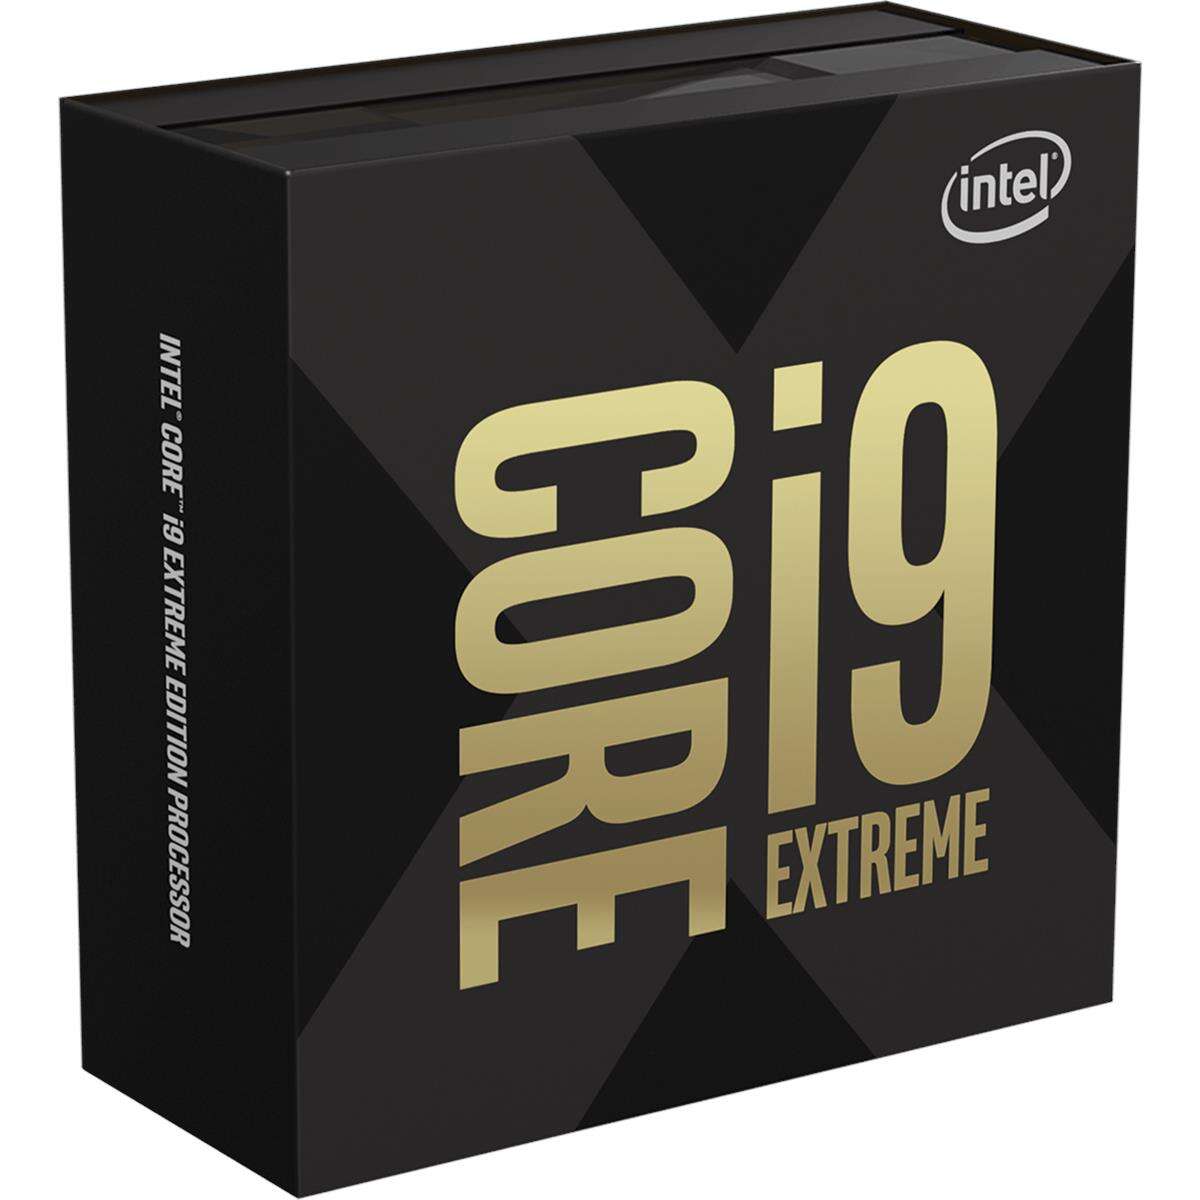 test Intel Core i9-10980XE, recenzja Intel Core i9-10980XE, review Intel Core i9-10980XE, opinia Intel Core i9-10980XE